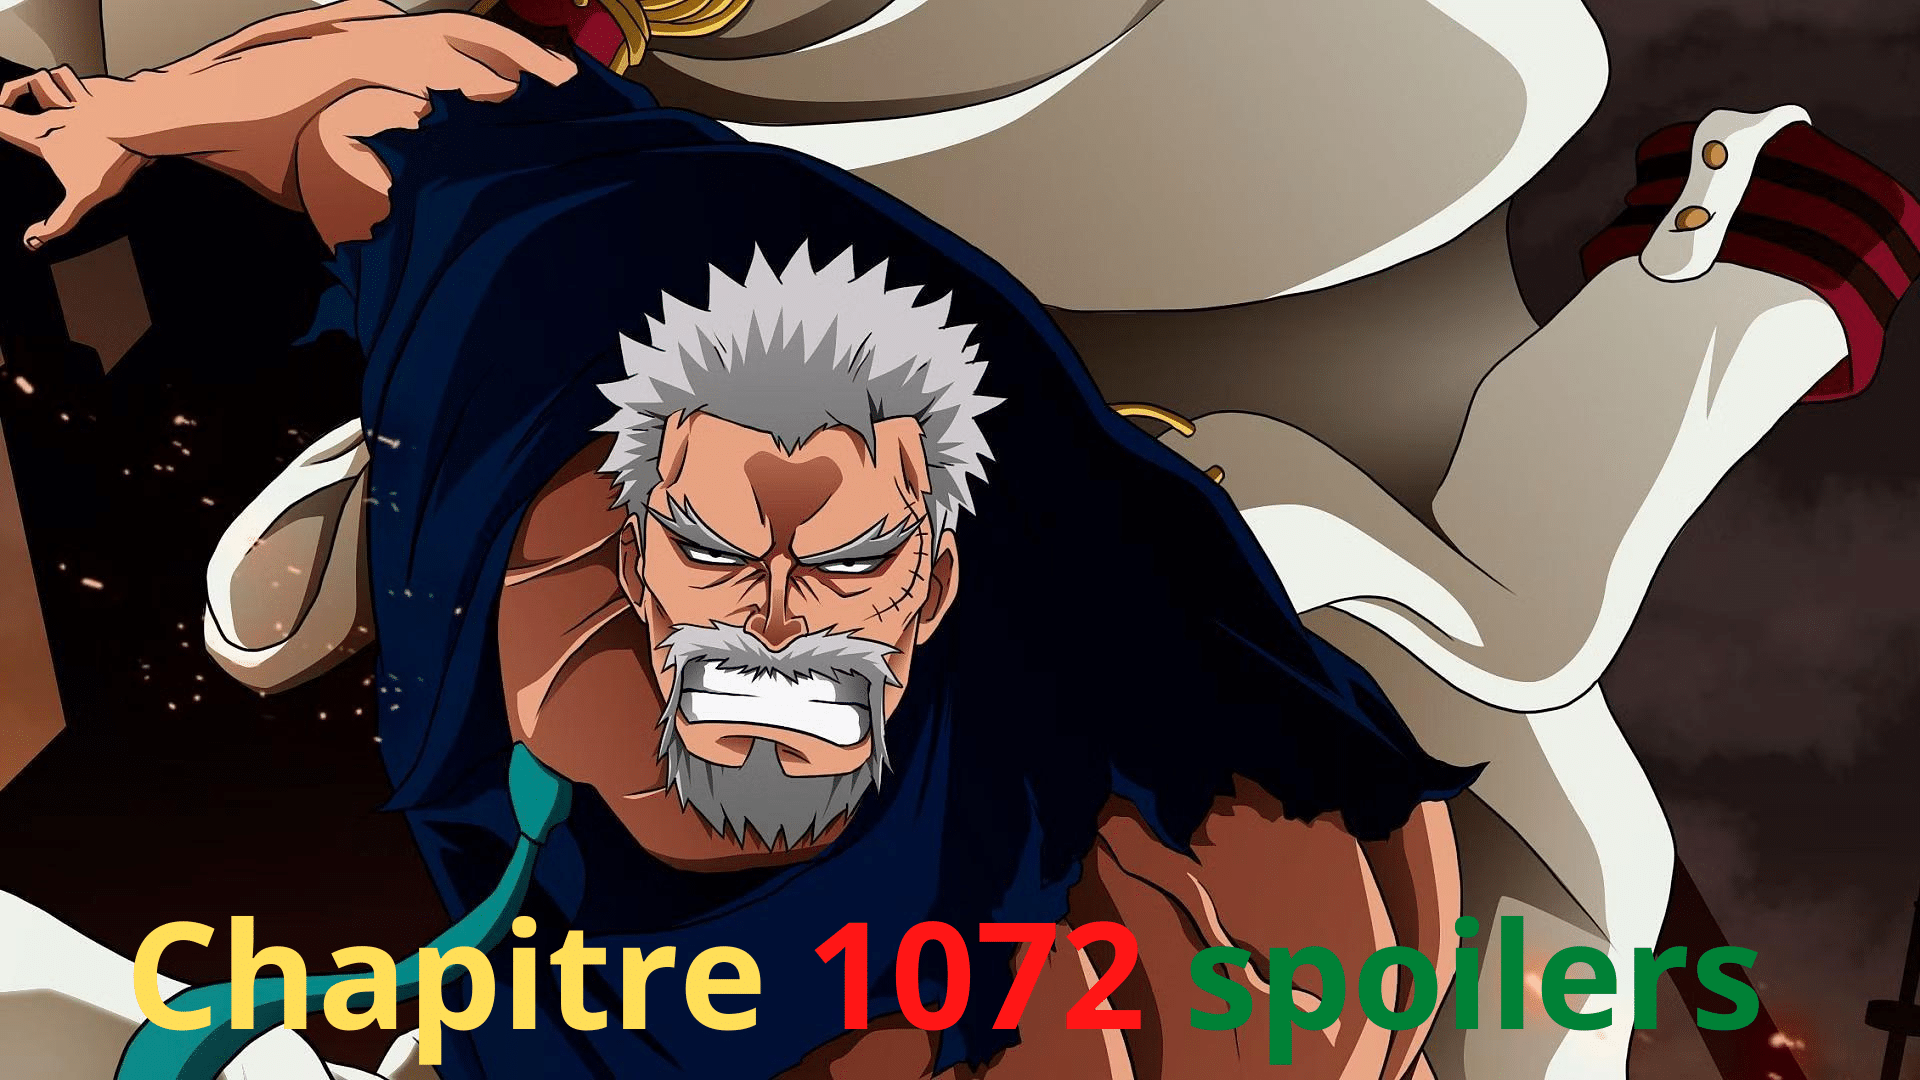 One Piece chapitre 1072 spoilers